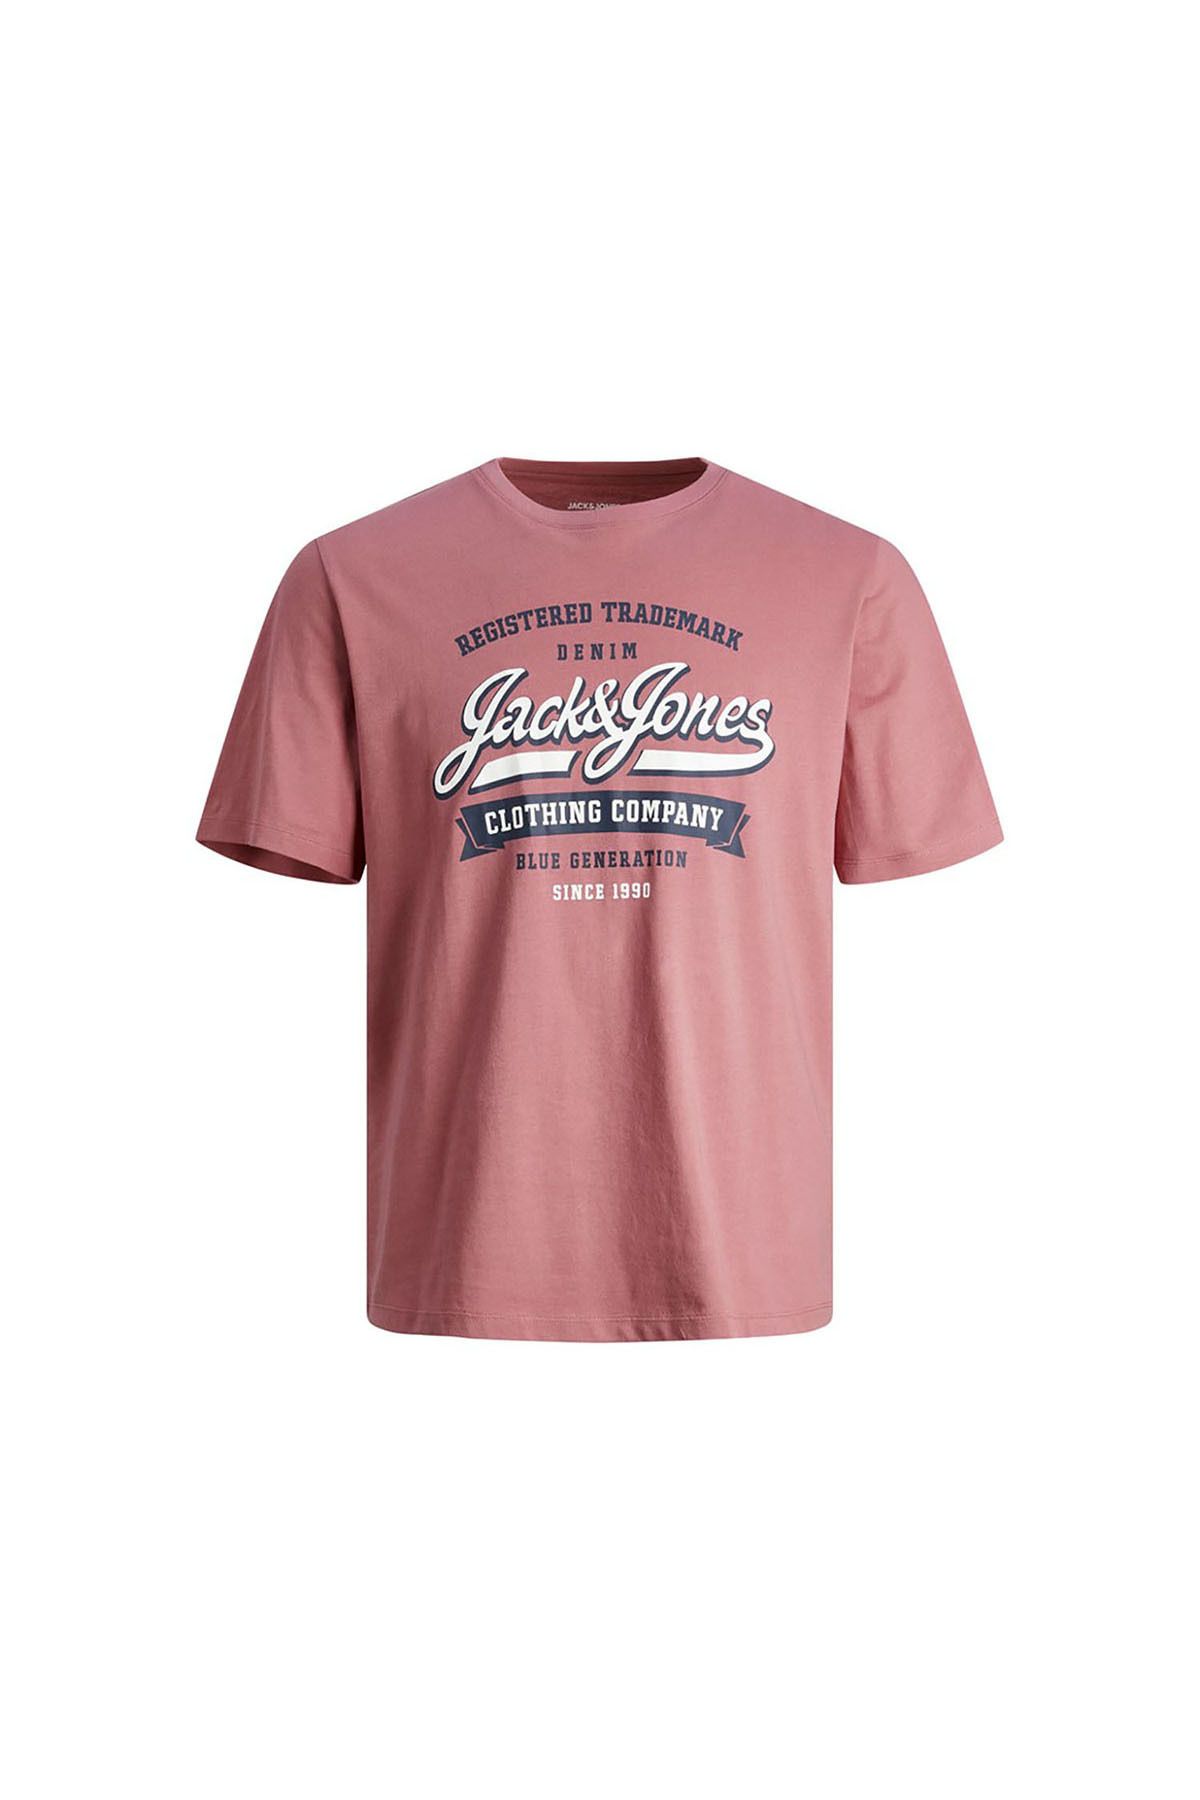 Jack & Jones Erkek T-Shirt 12246690